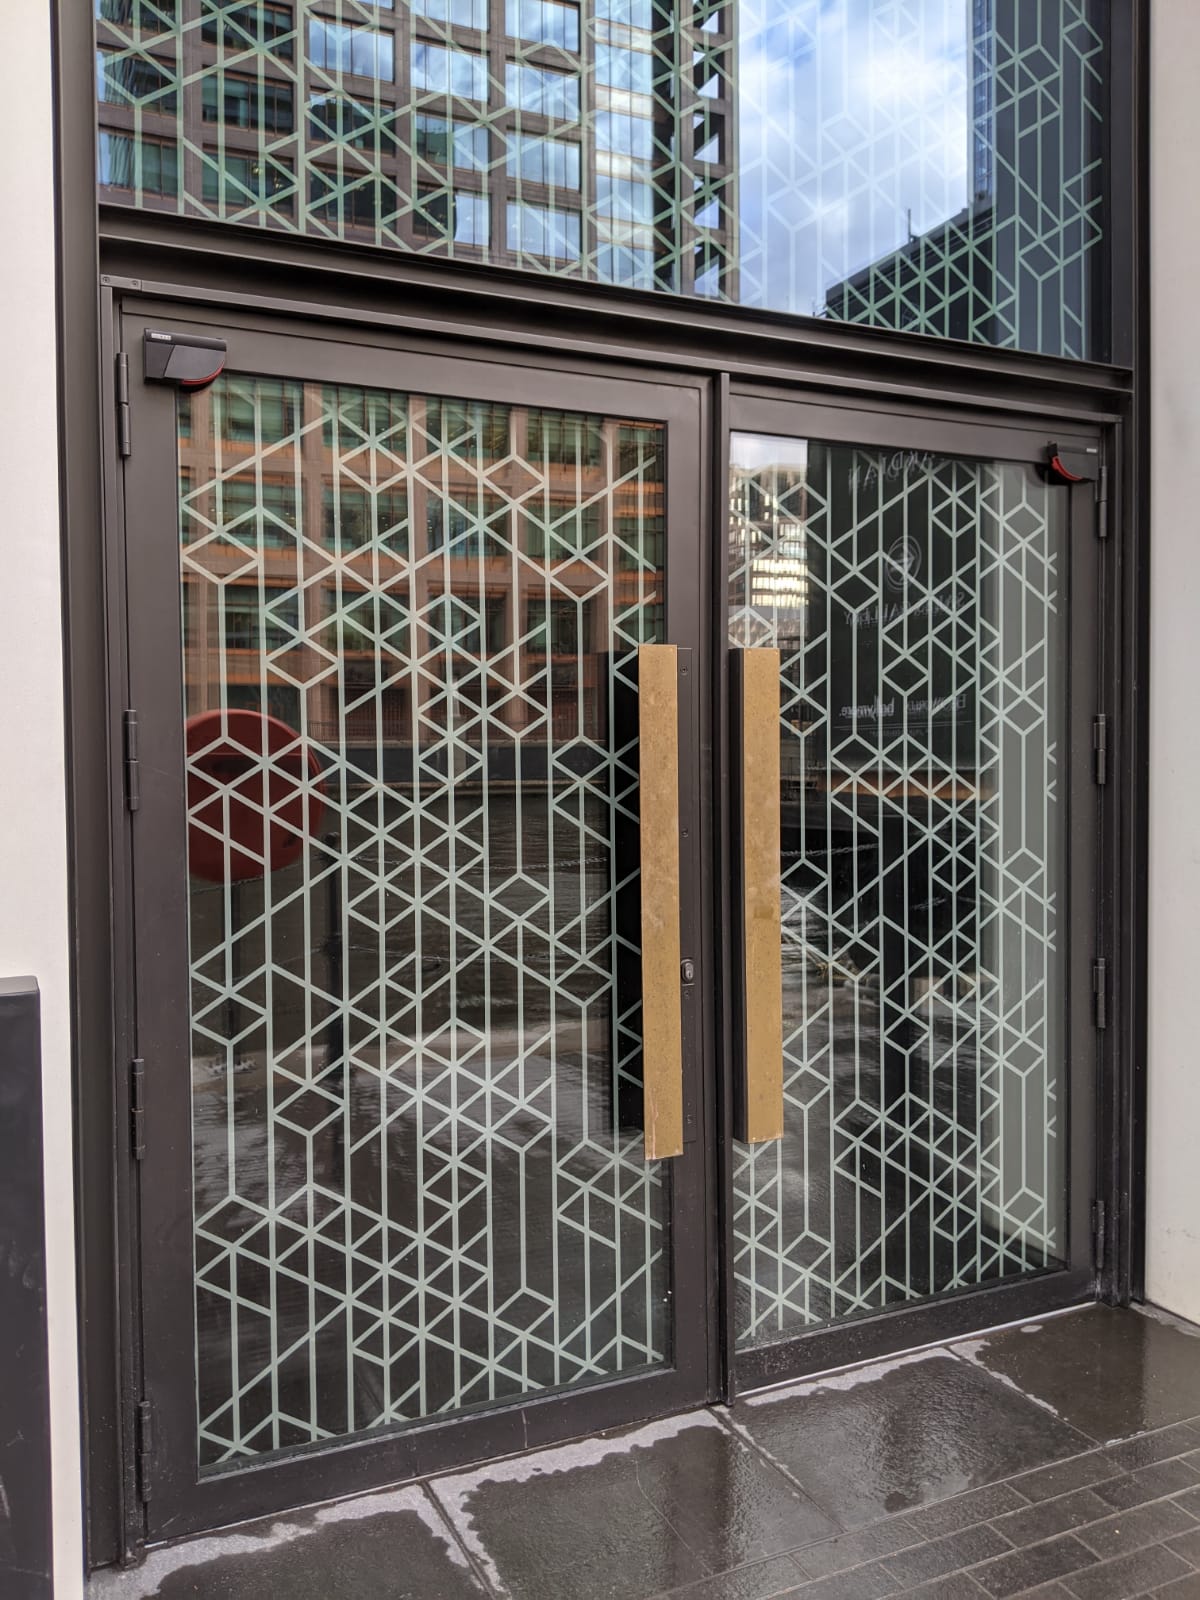 LPS1175 SR3 steel and glass communal entrance door